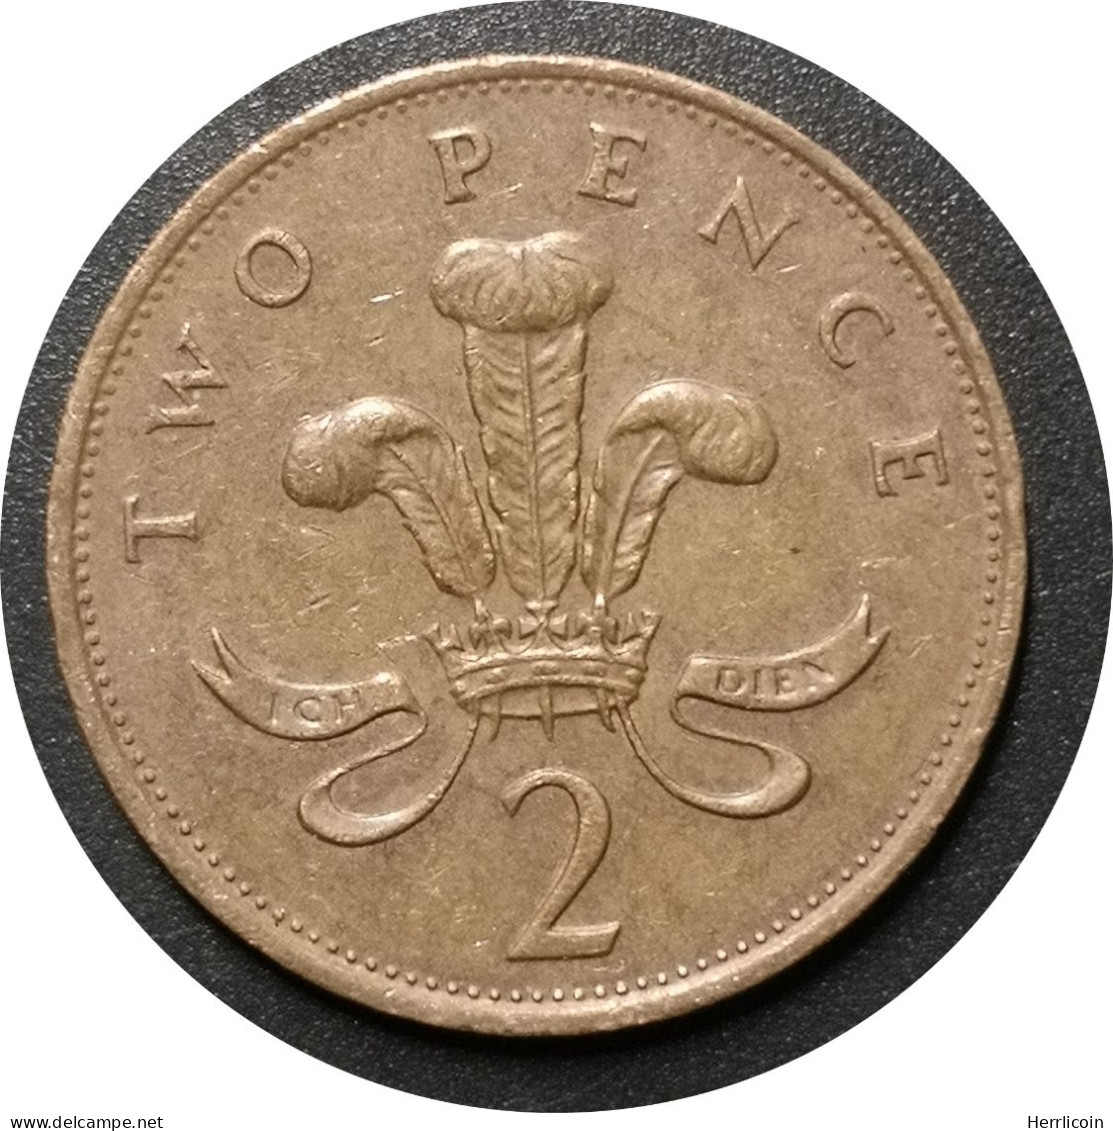 Monnaie Royaume Uni - 1987 - 2 Pence Elizabeth II 3e Effigie, Bronze - 2 Pence & 2 New Pence